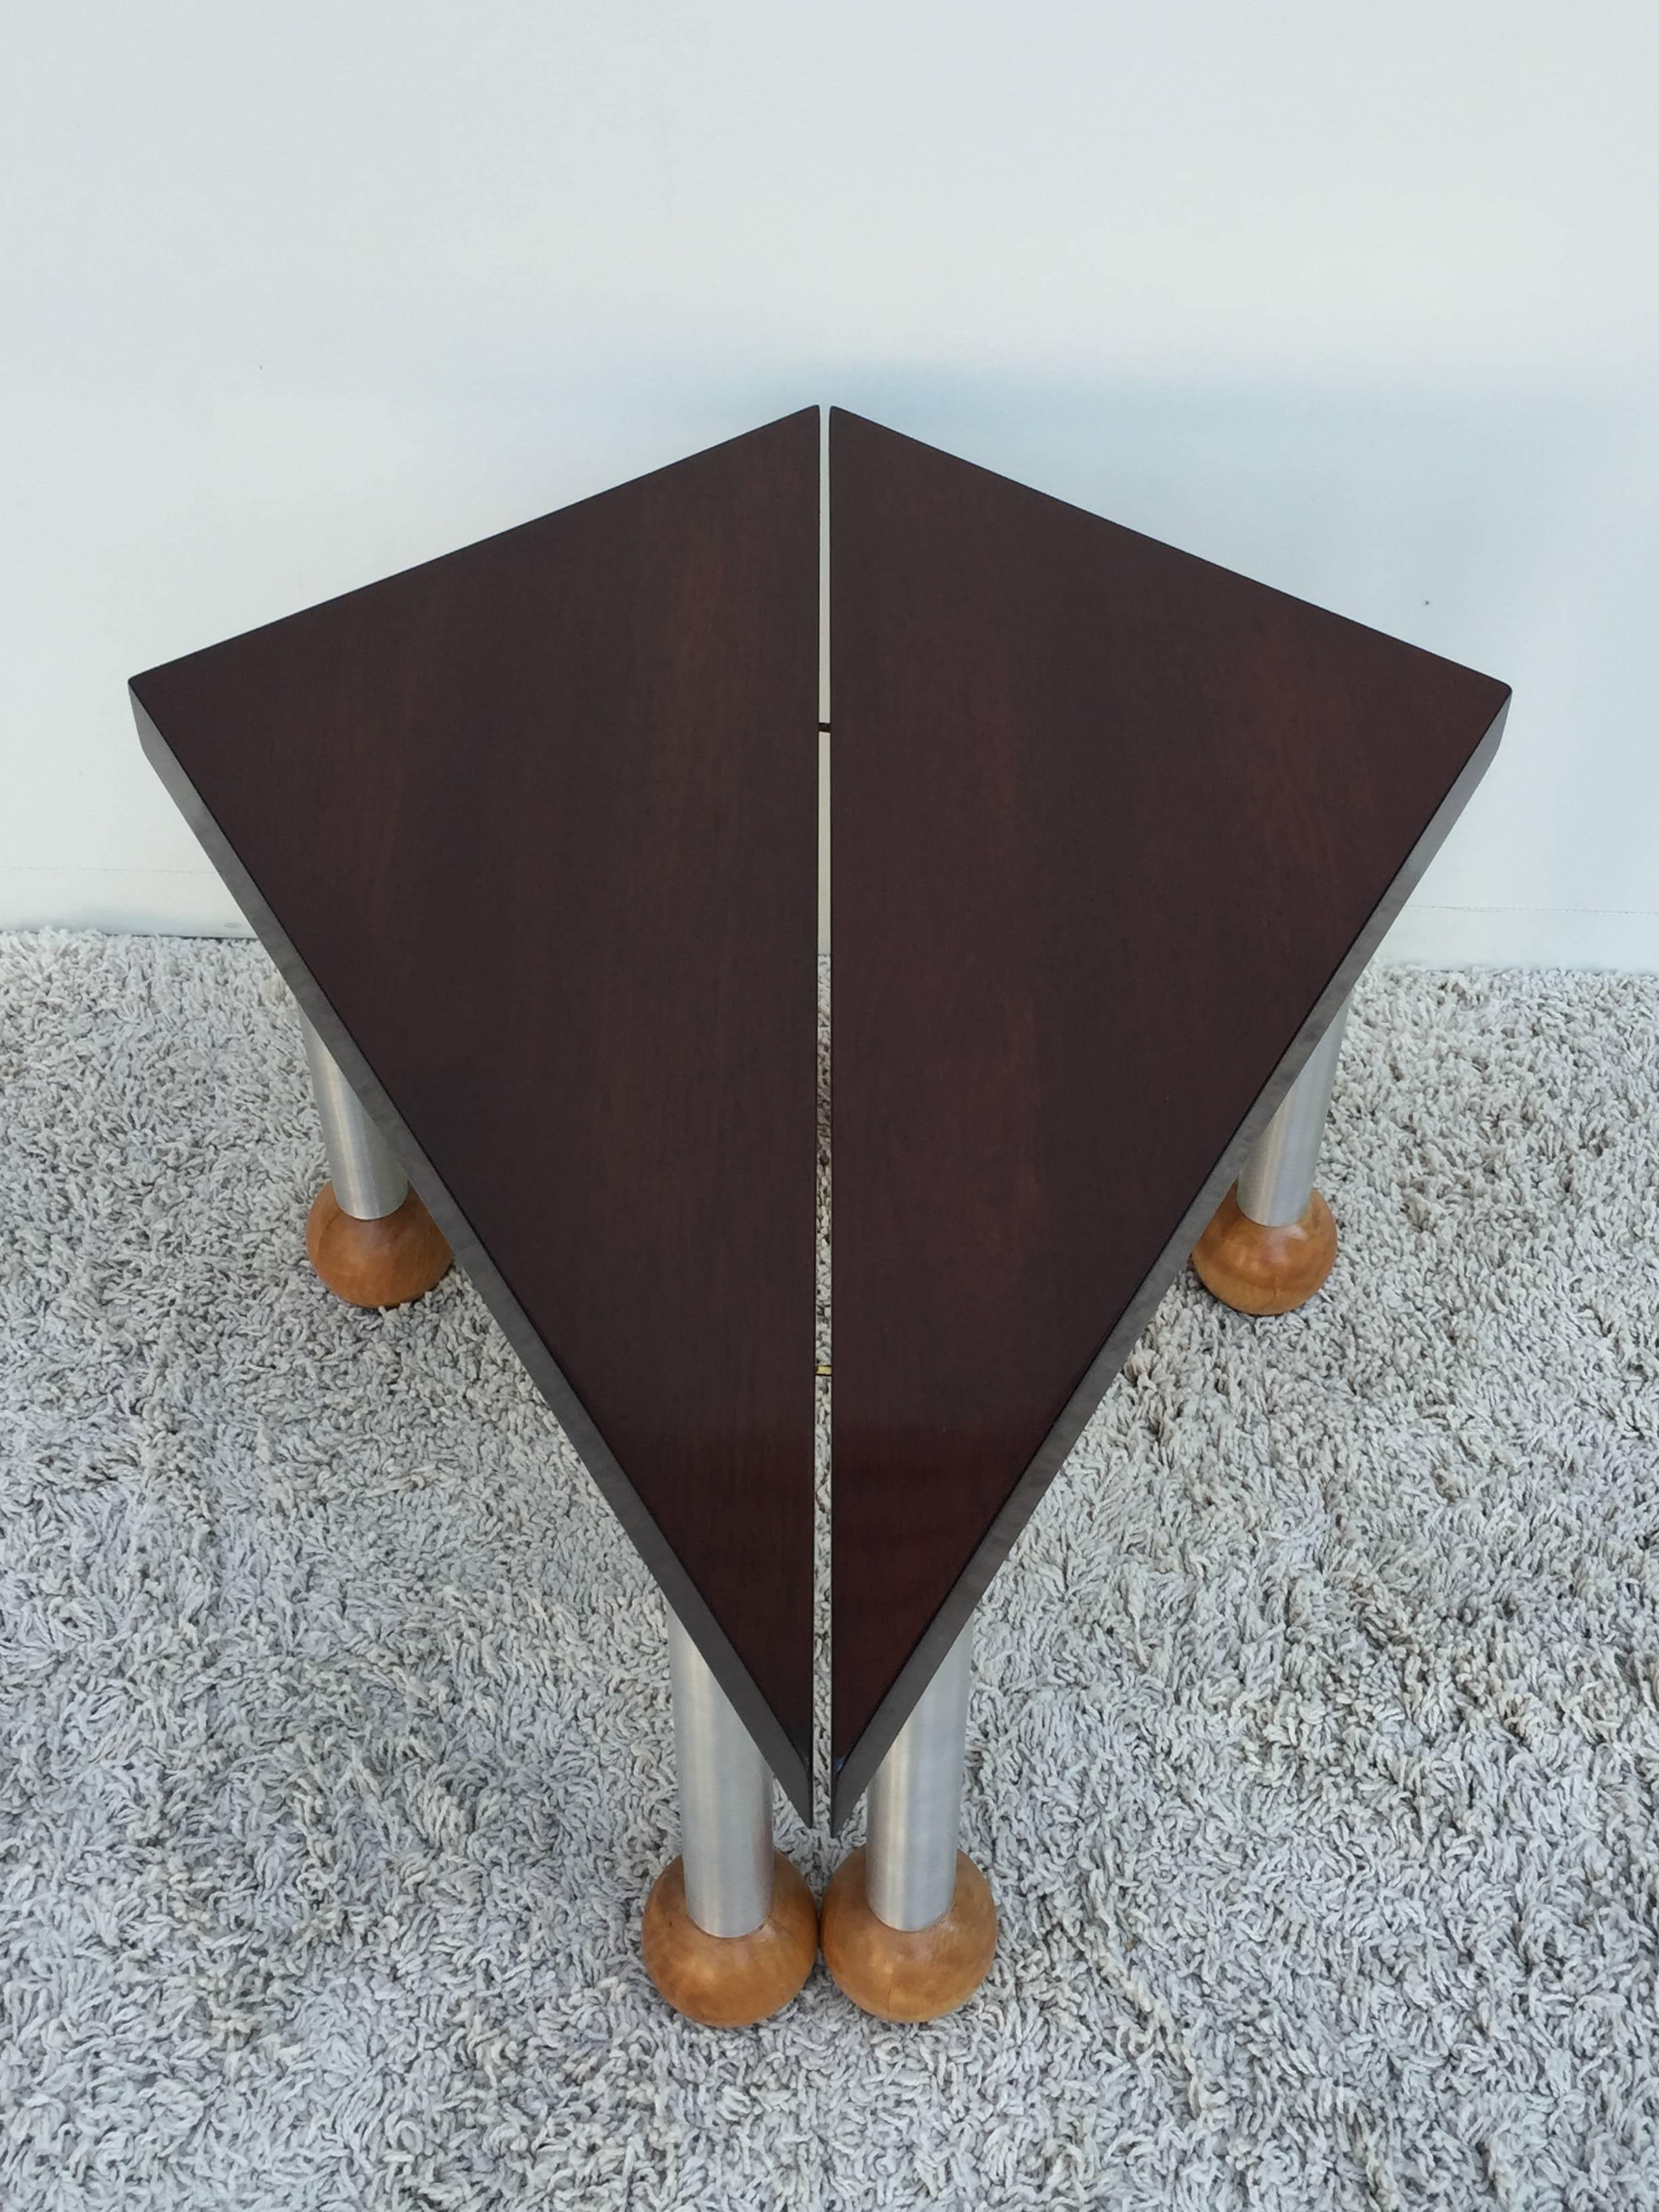 20th Century Pair Triangular Tables Spun Aluminum Legs Blonde Mahogany Ball Feet Russel Wrigh